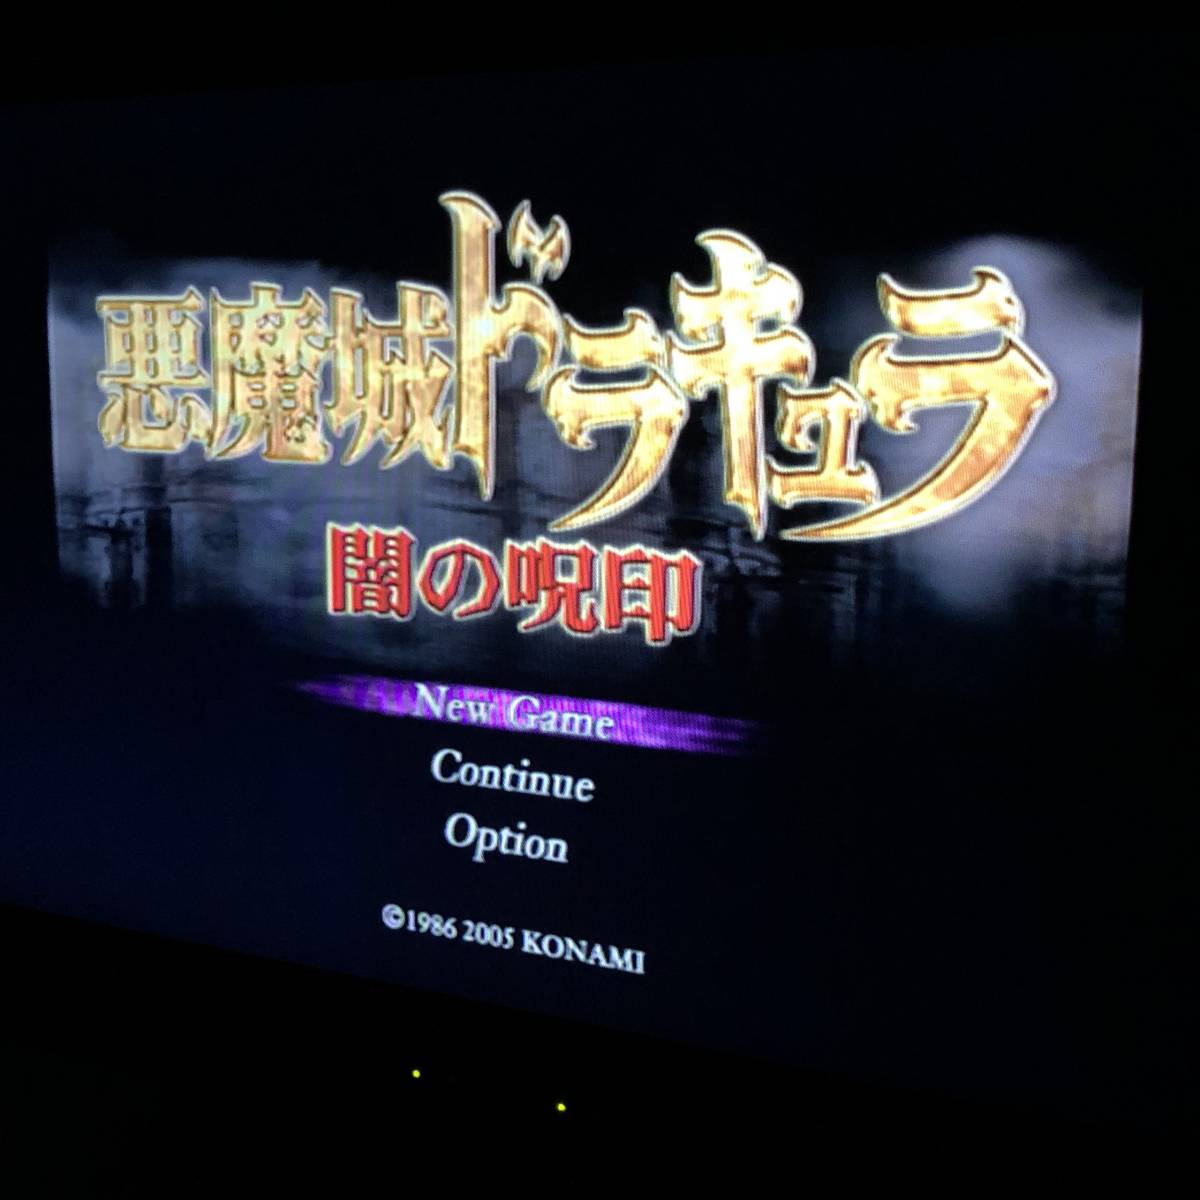 PS2 悪魔城ドラキュラ 闇の呪印 コナミ ザ・ベスト版 箱説付き PlayStation 2 Castlevania: Curse of Darkness CIB Konami the Best_画像10